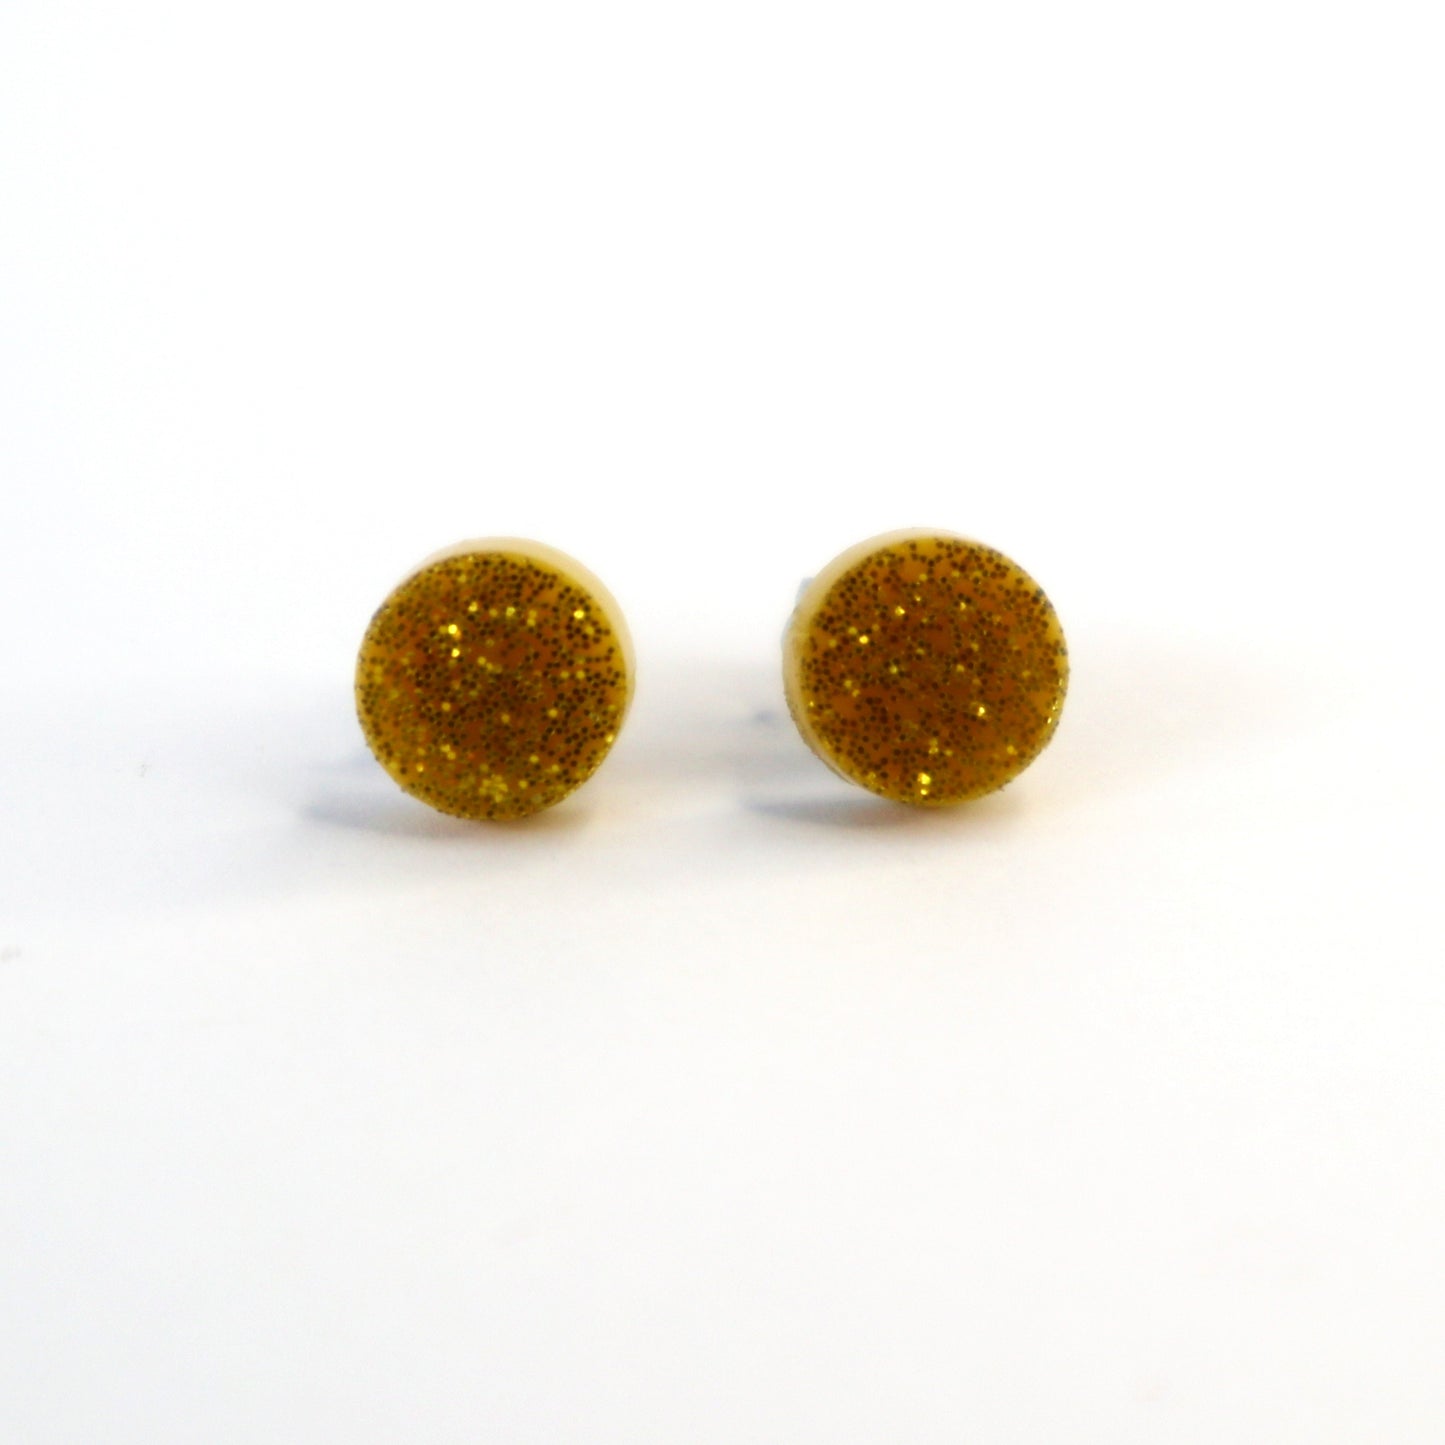 Gold / Yellow Glitter Earrings / Studs - acrylic circles